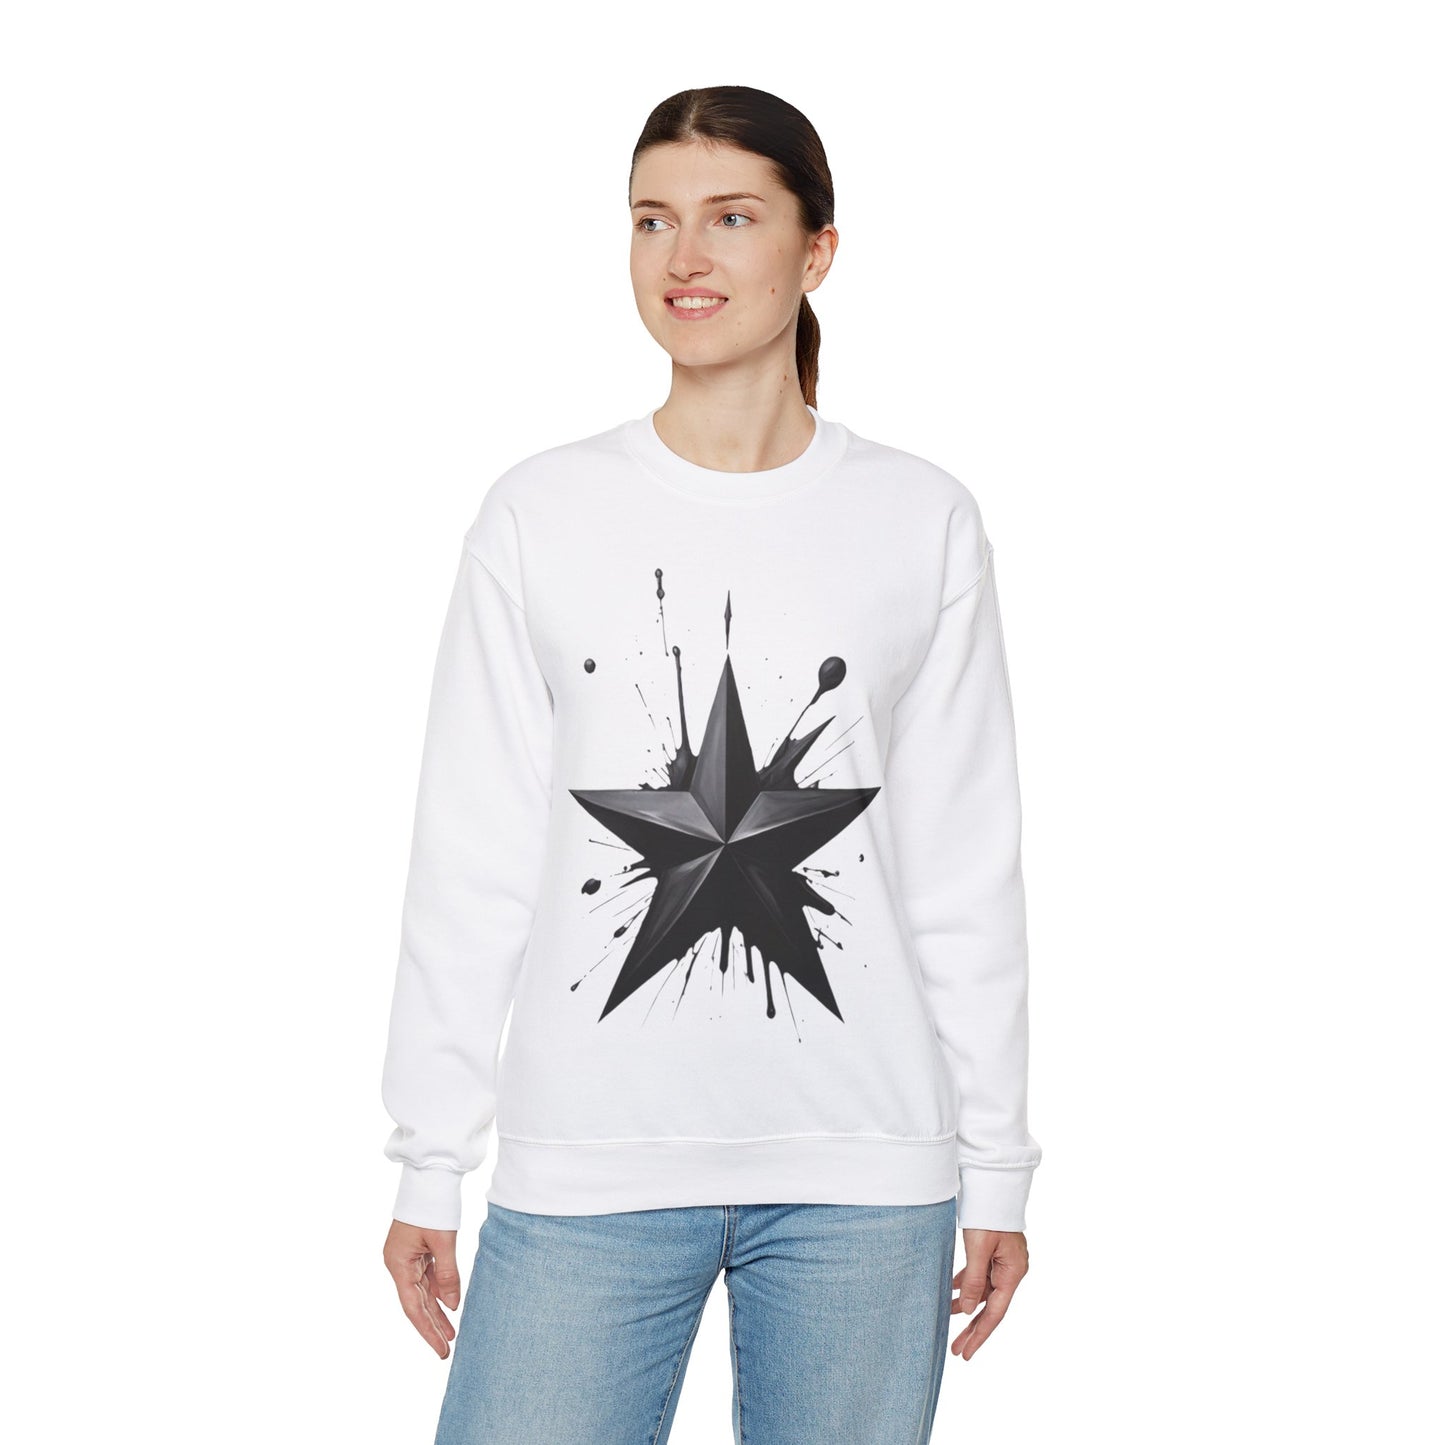 Black Star - Unisex Crewneck Sweatshirt